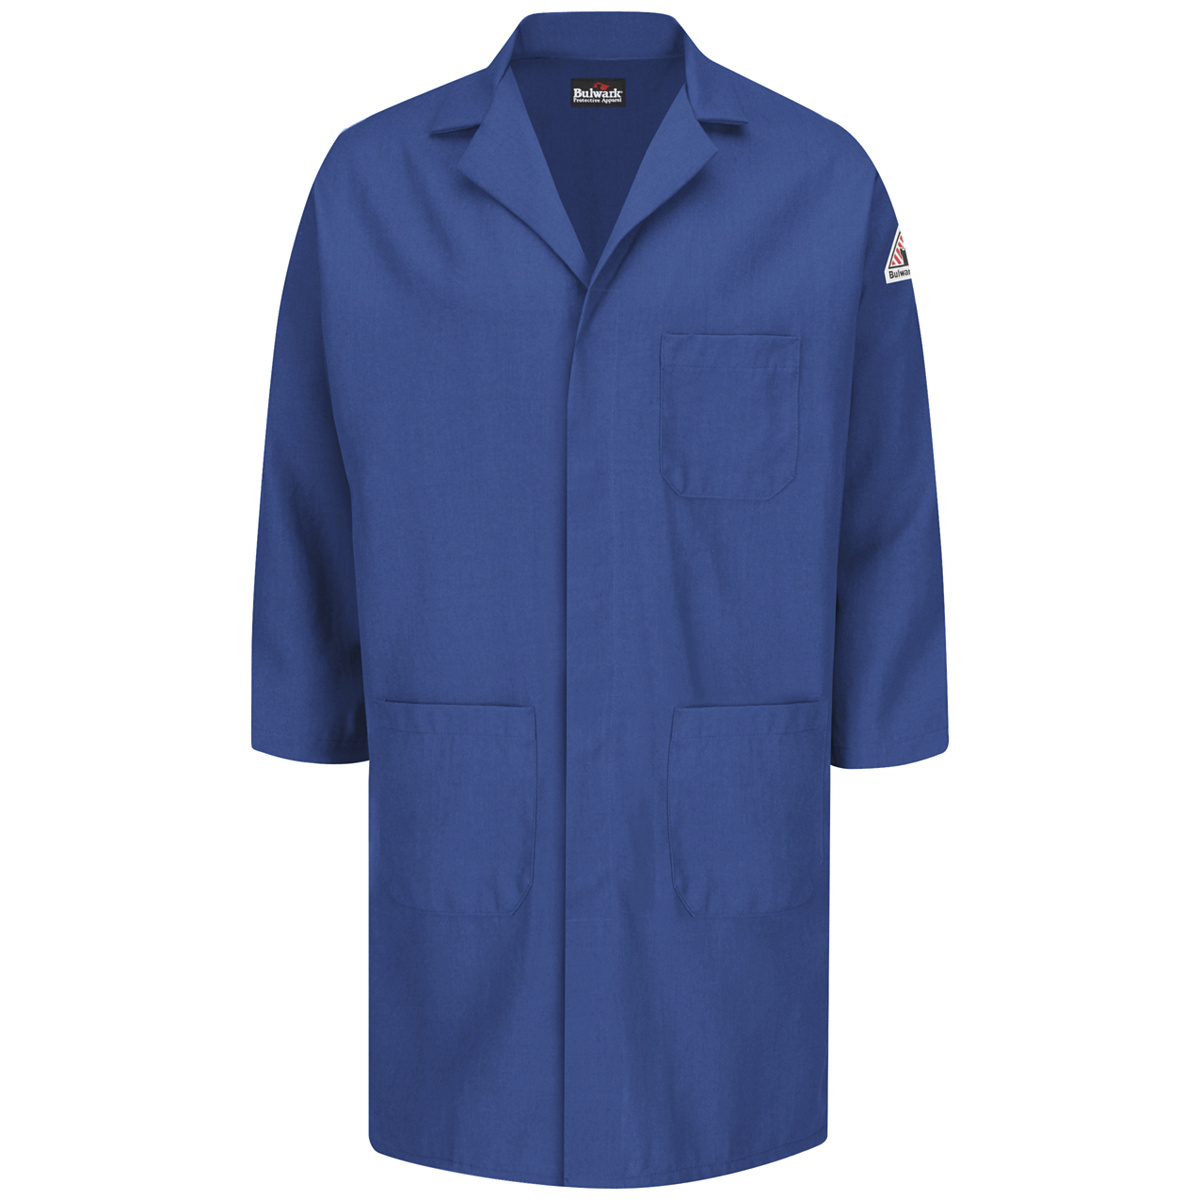 Bulwark® Medium Regular Royal Blue Nomex® IIIA/Nomex® Aramid/Kevlar® Aramid Flame Resistant Lab Coat With Snap Front Closure